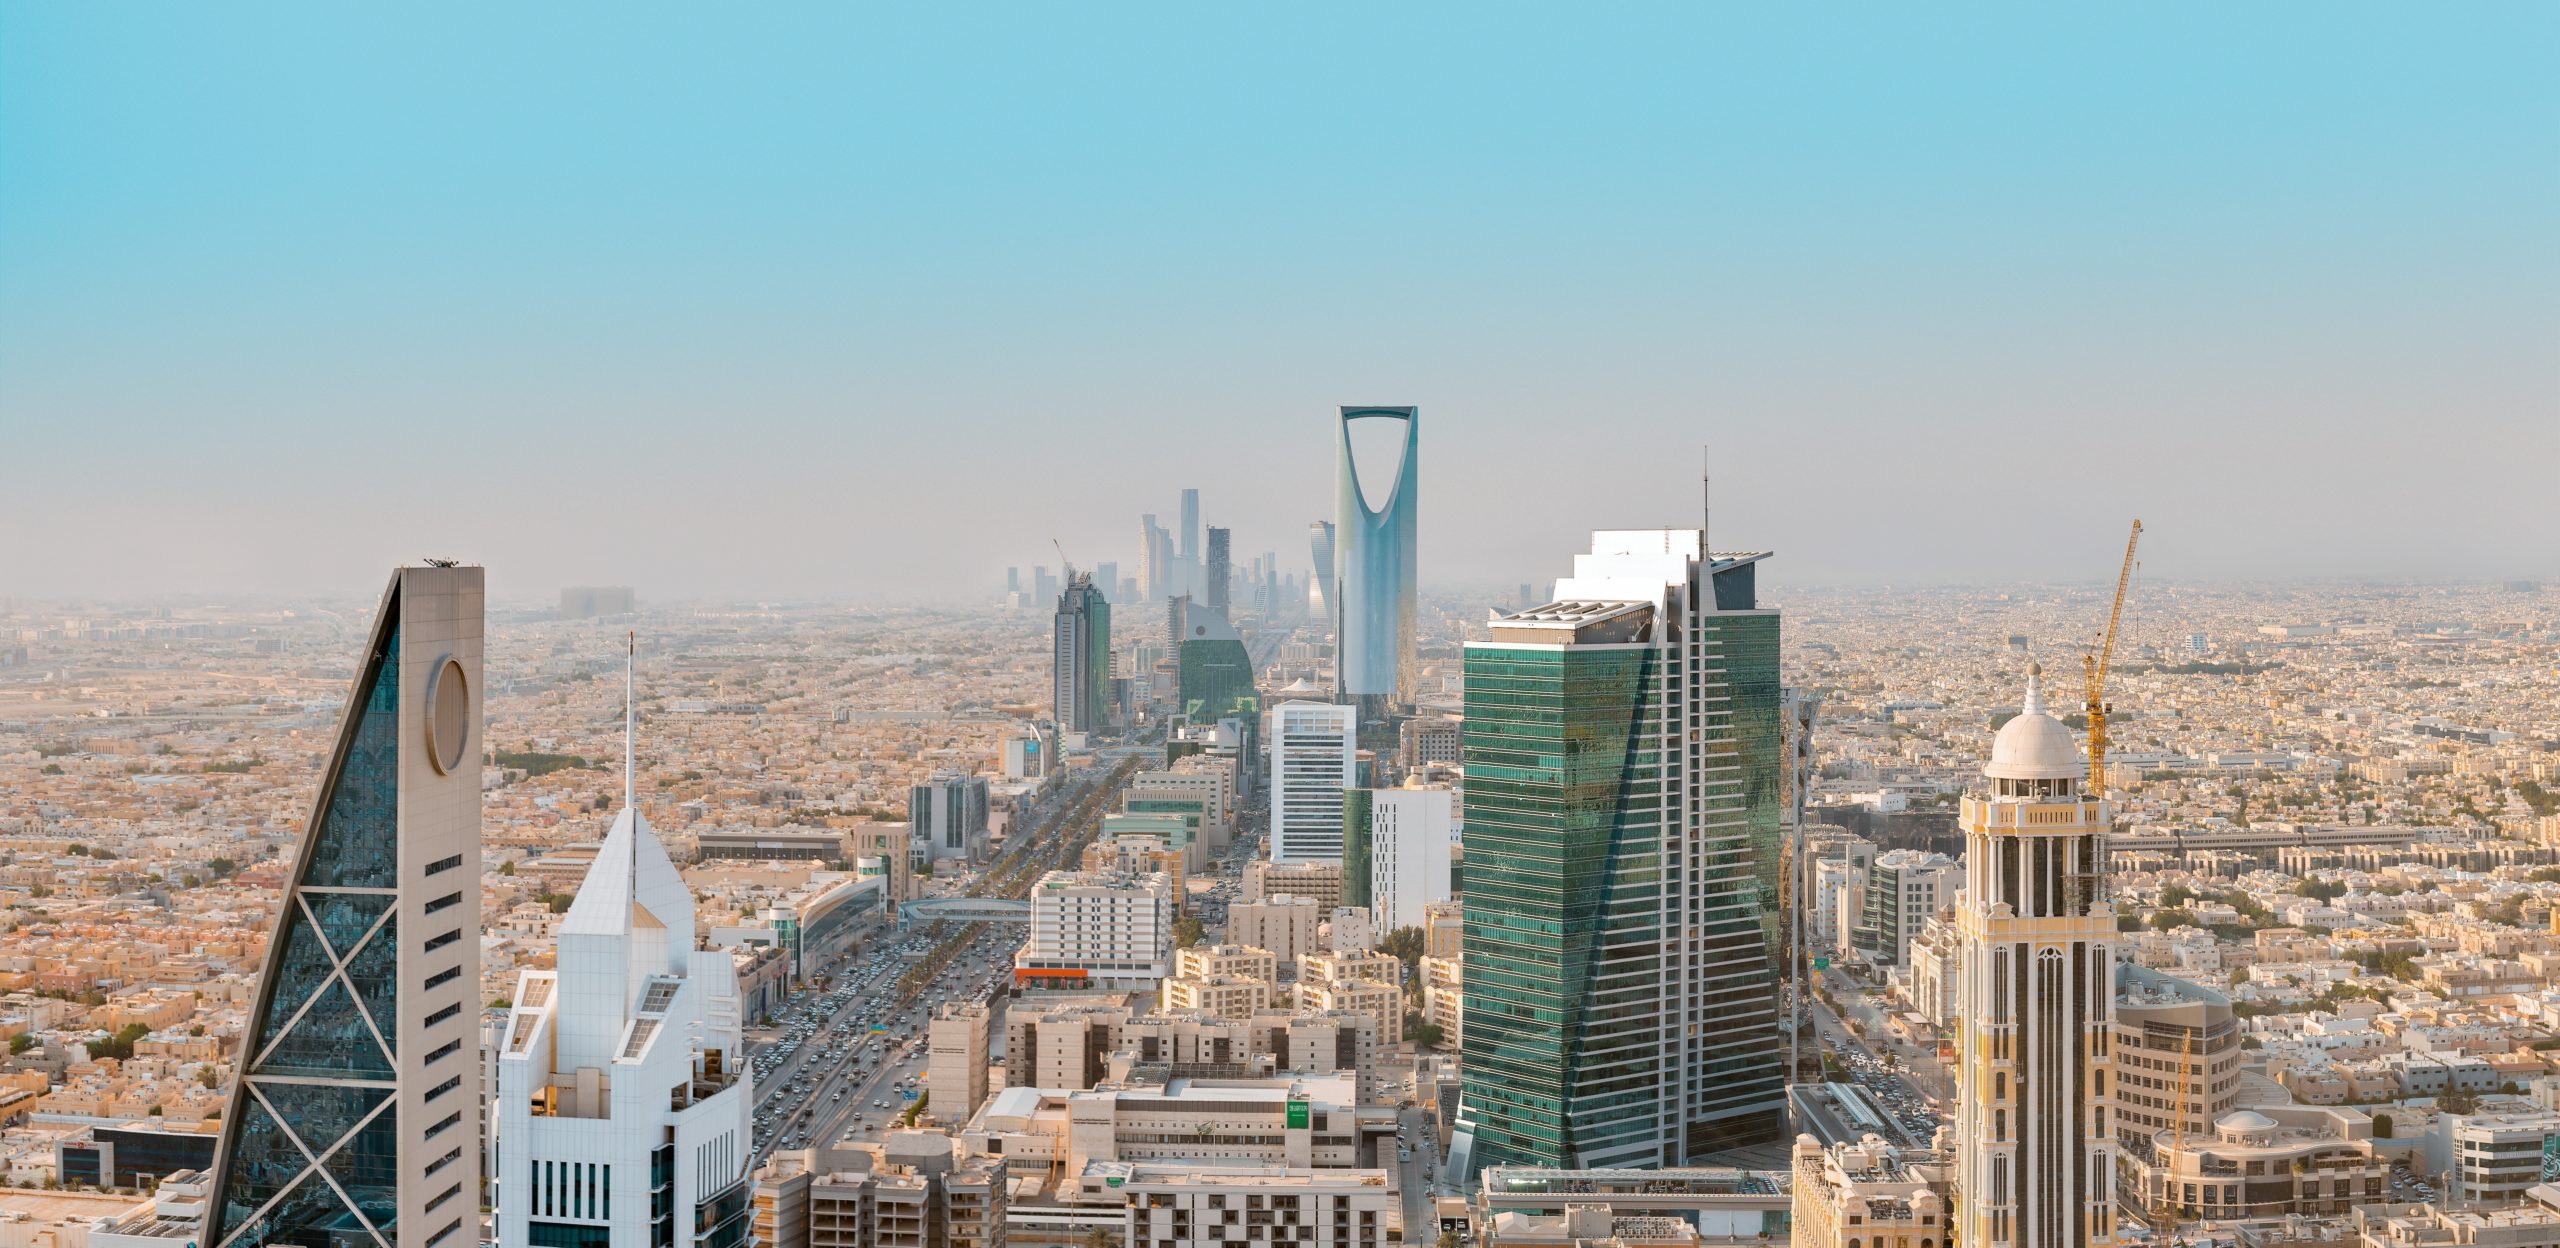 Saudi Arabia [Shutterstock]